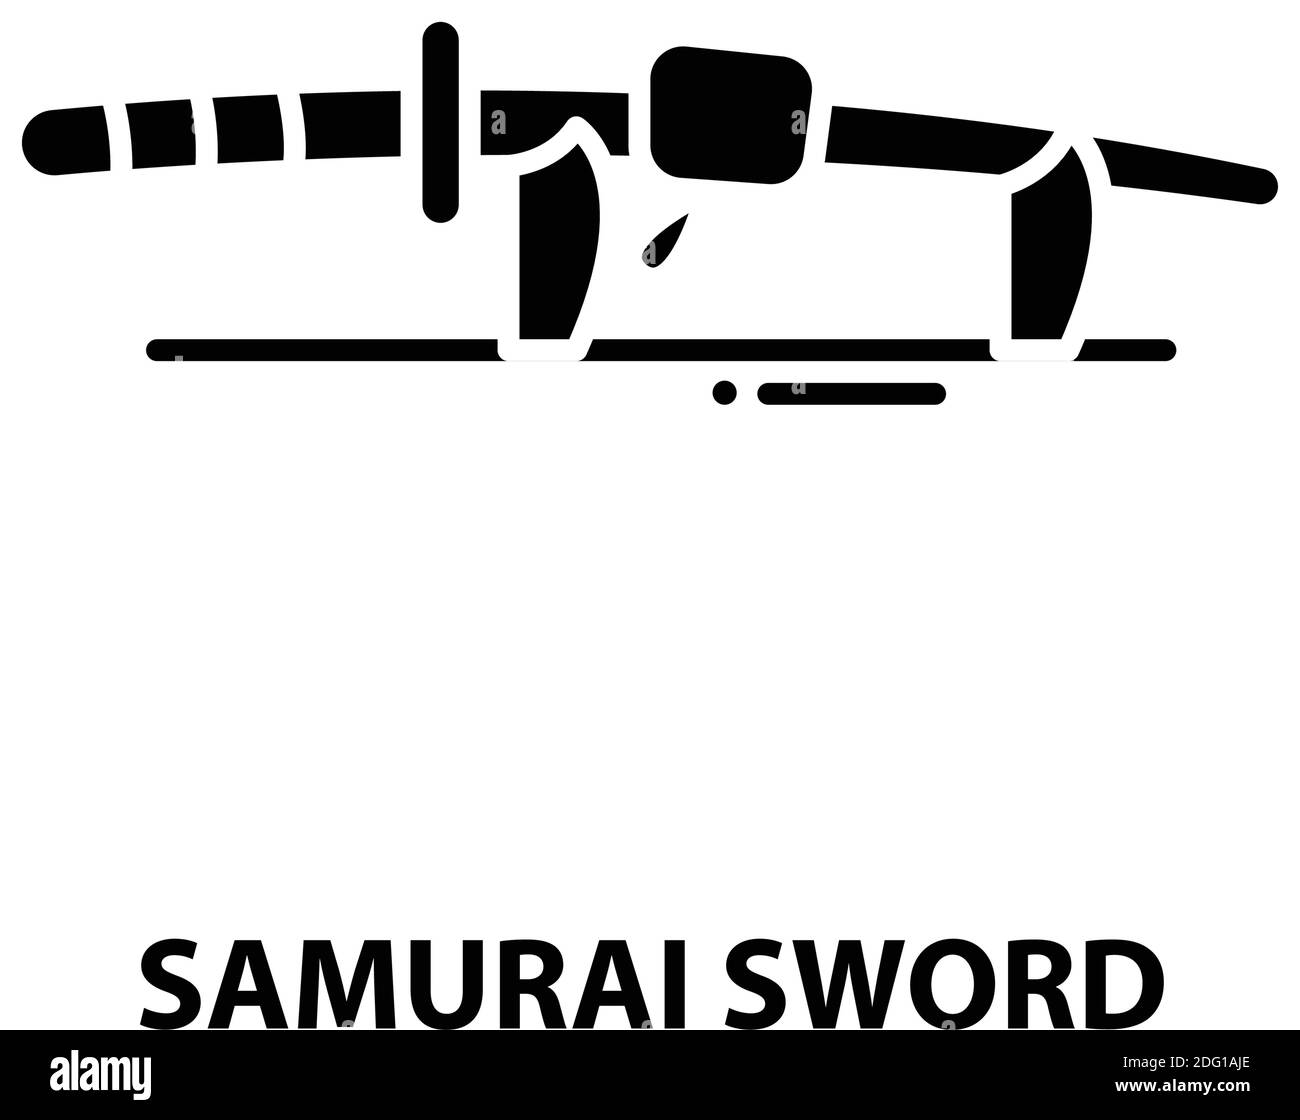 samurai sword icon, black vector sign with editable strokes, concept illustration Stock Vector